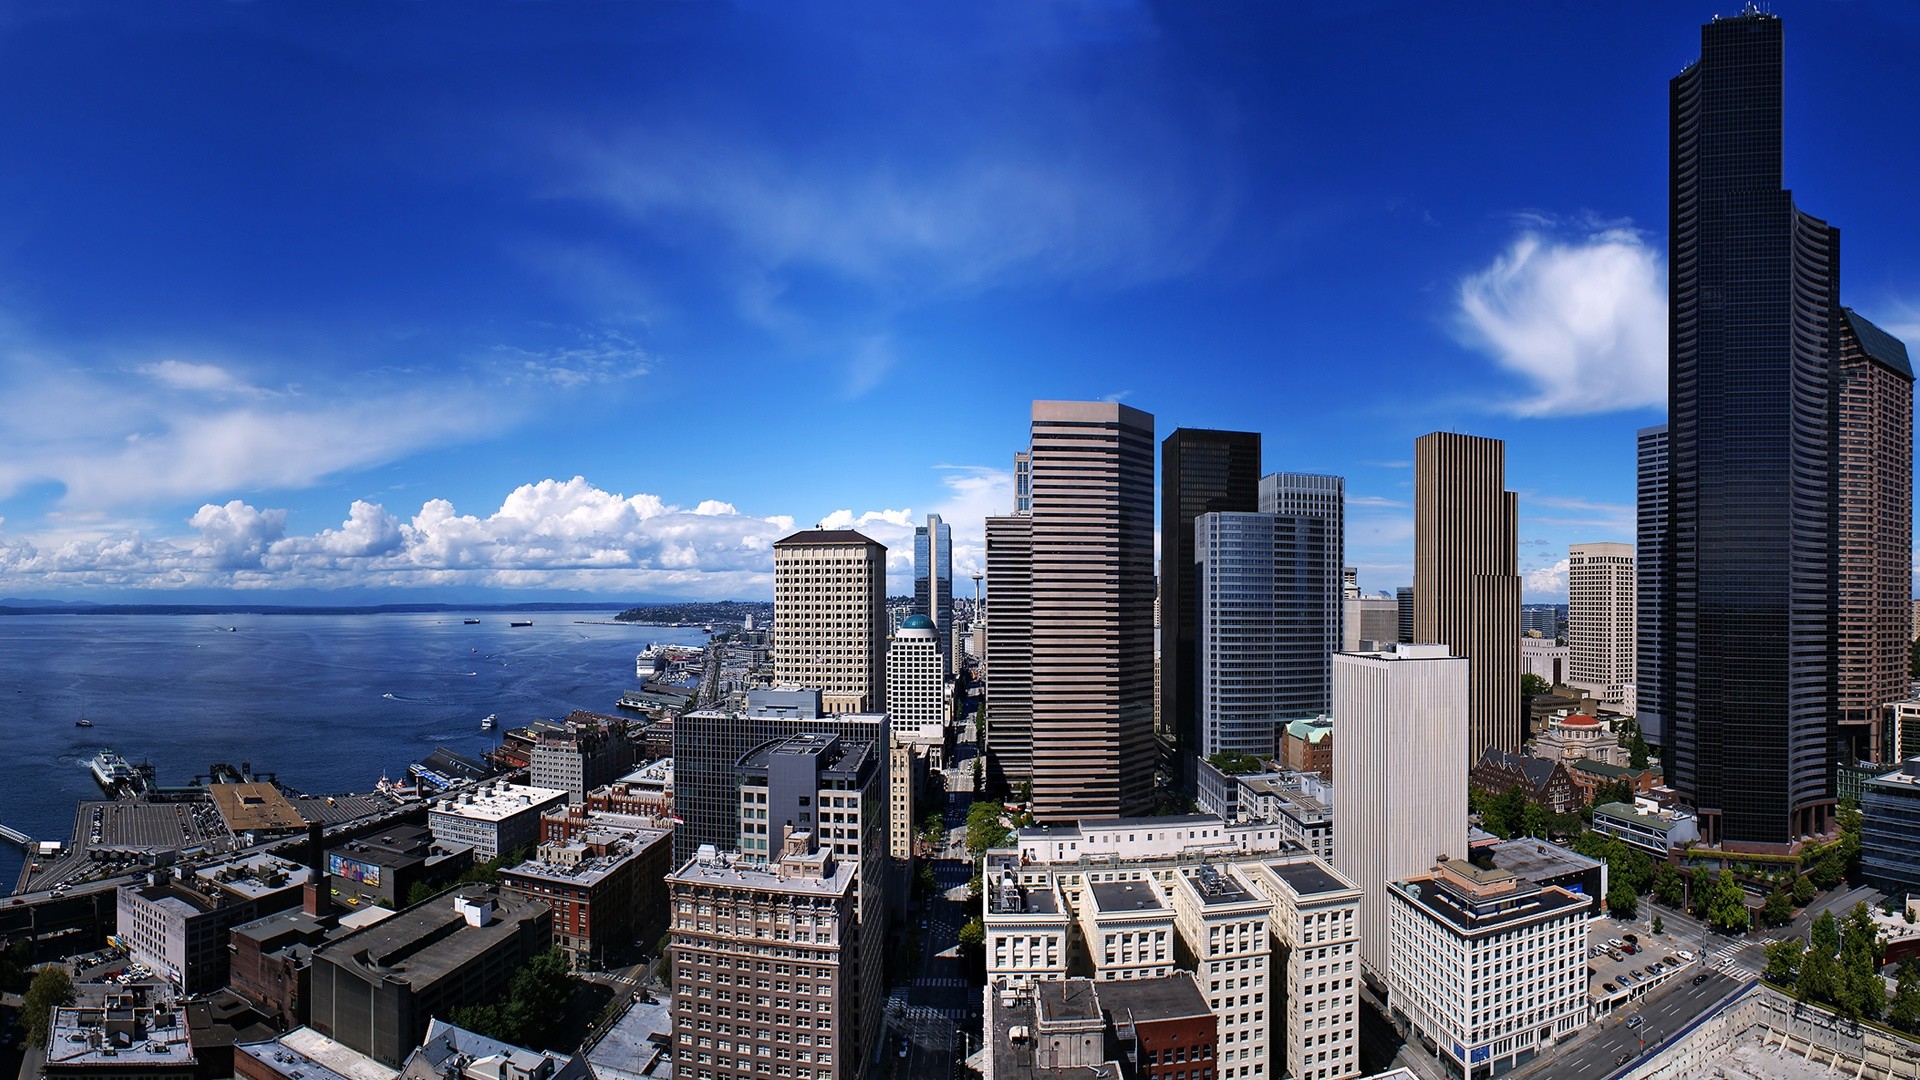 Seattle business center skyscraper aerial view